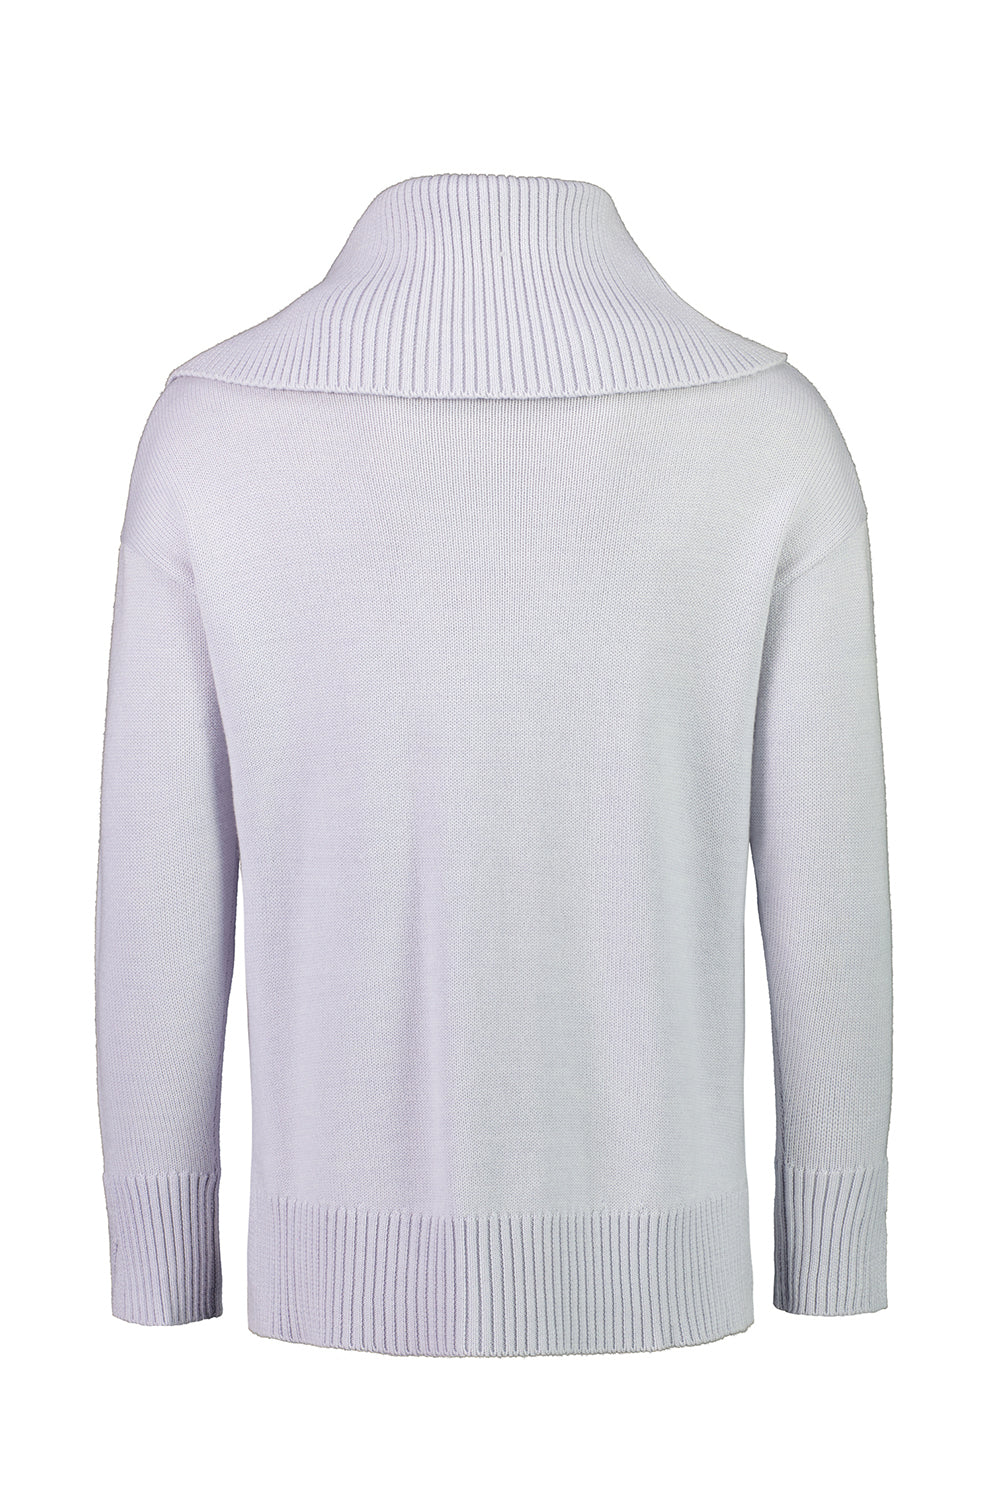 Verge Oasis Sweater 8467